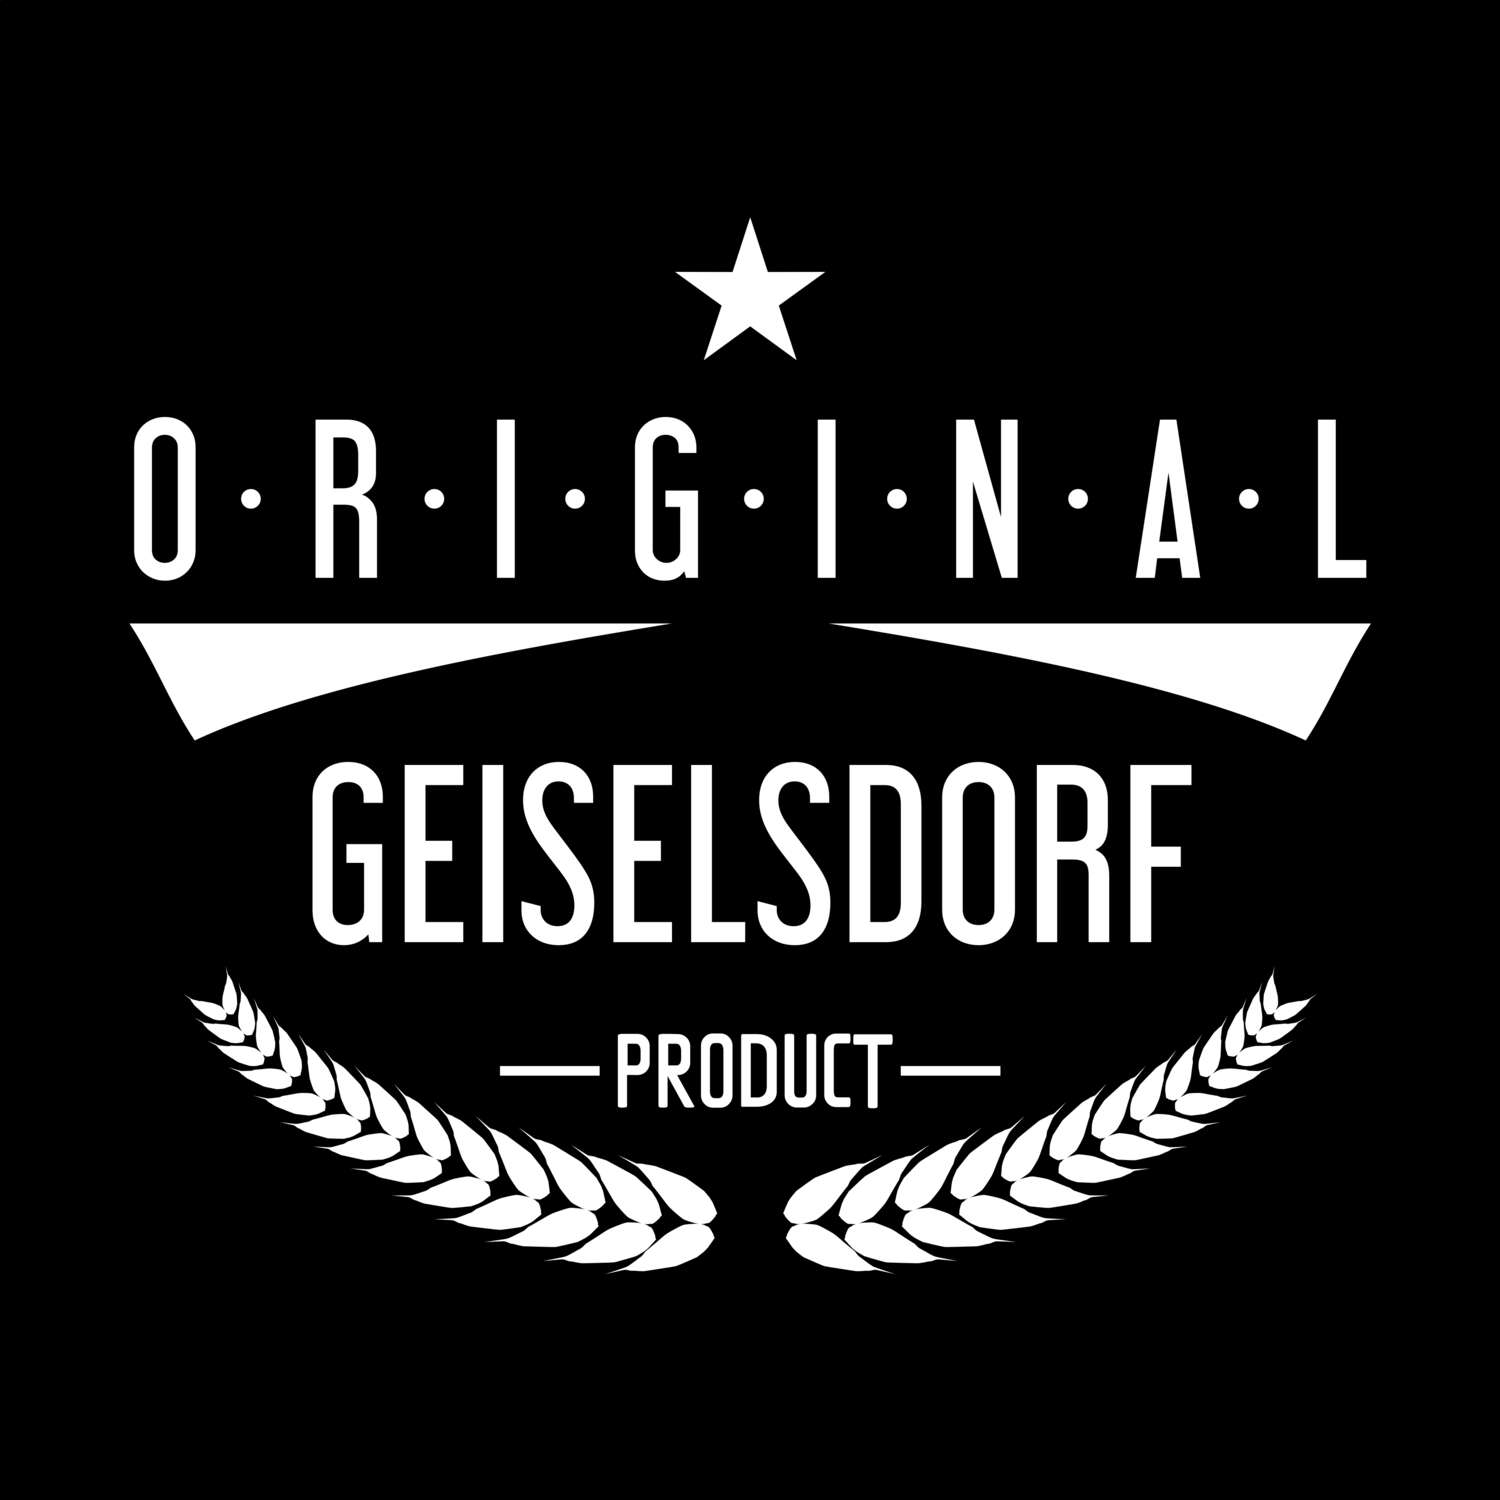 Geiselsdorf T-Shirt »Original Product«